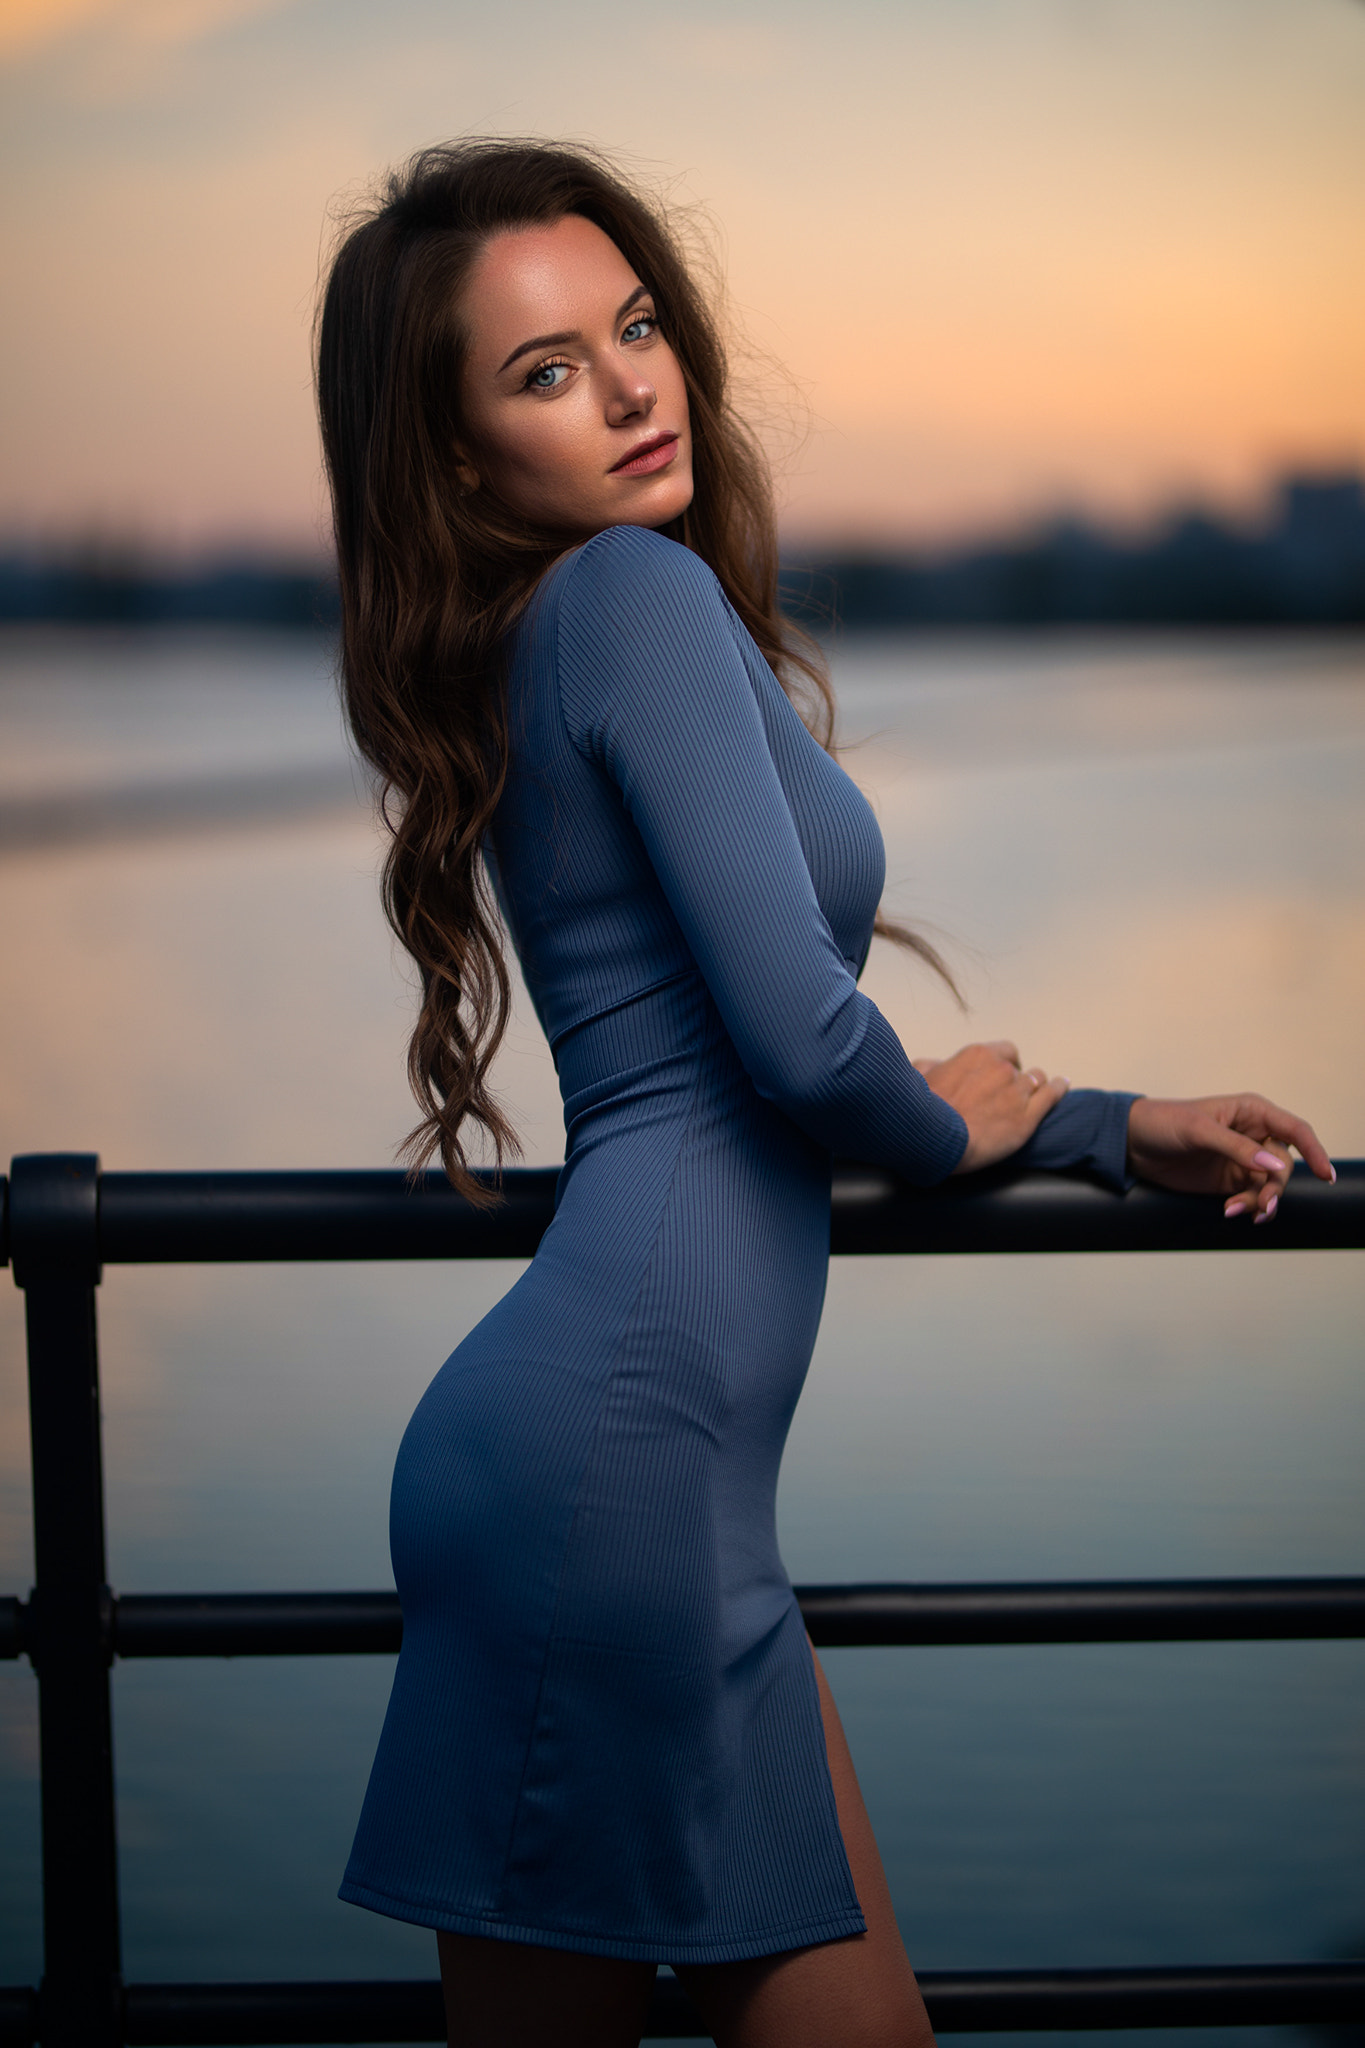 Dmitry Shulgin Women Brunette Long Hair Wavy Hair Blue Eyes Looking At Viewer Dress Blue Clothing Fe 1365x2048